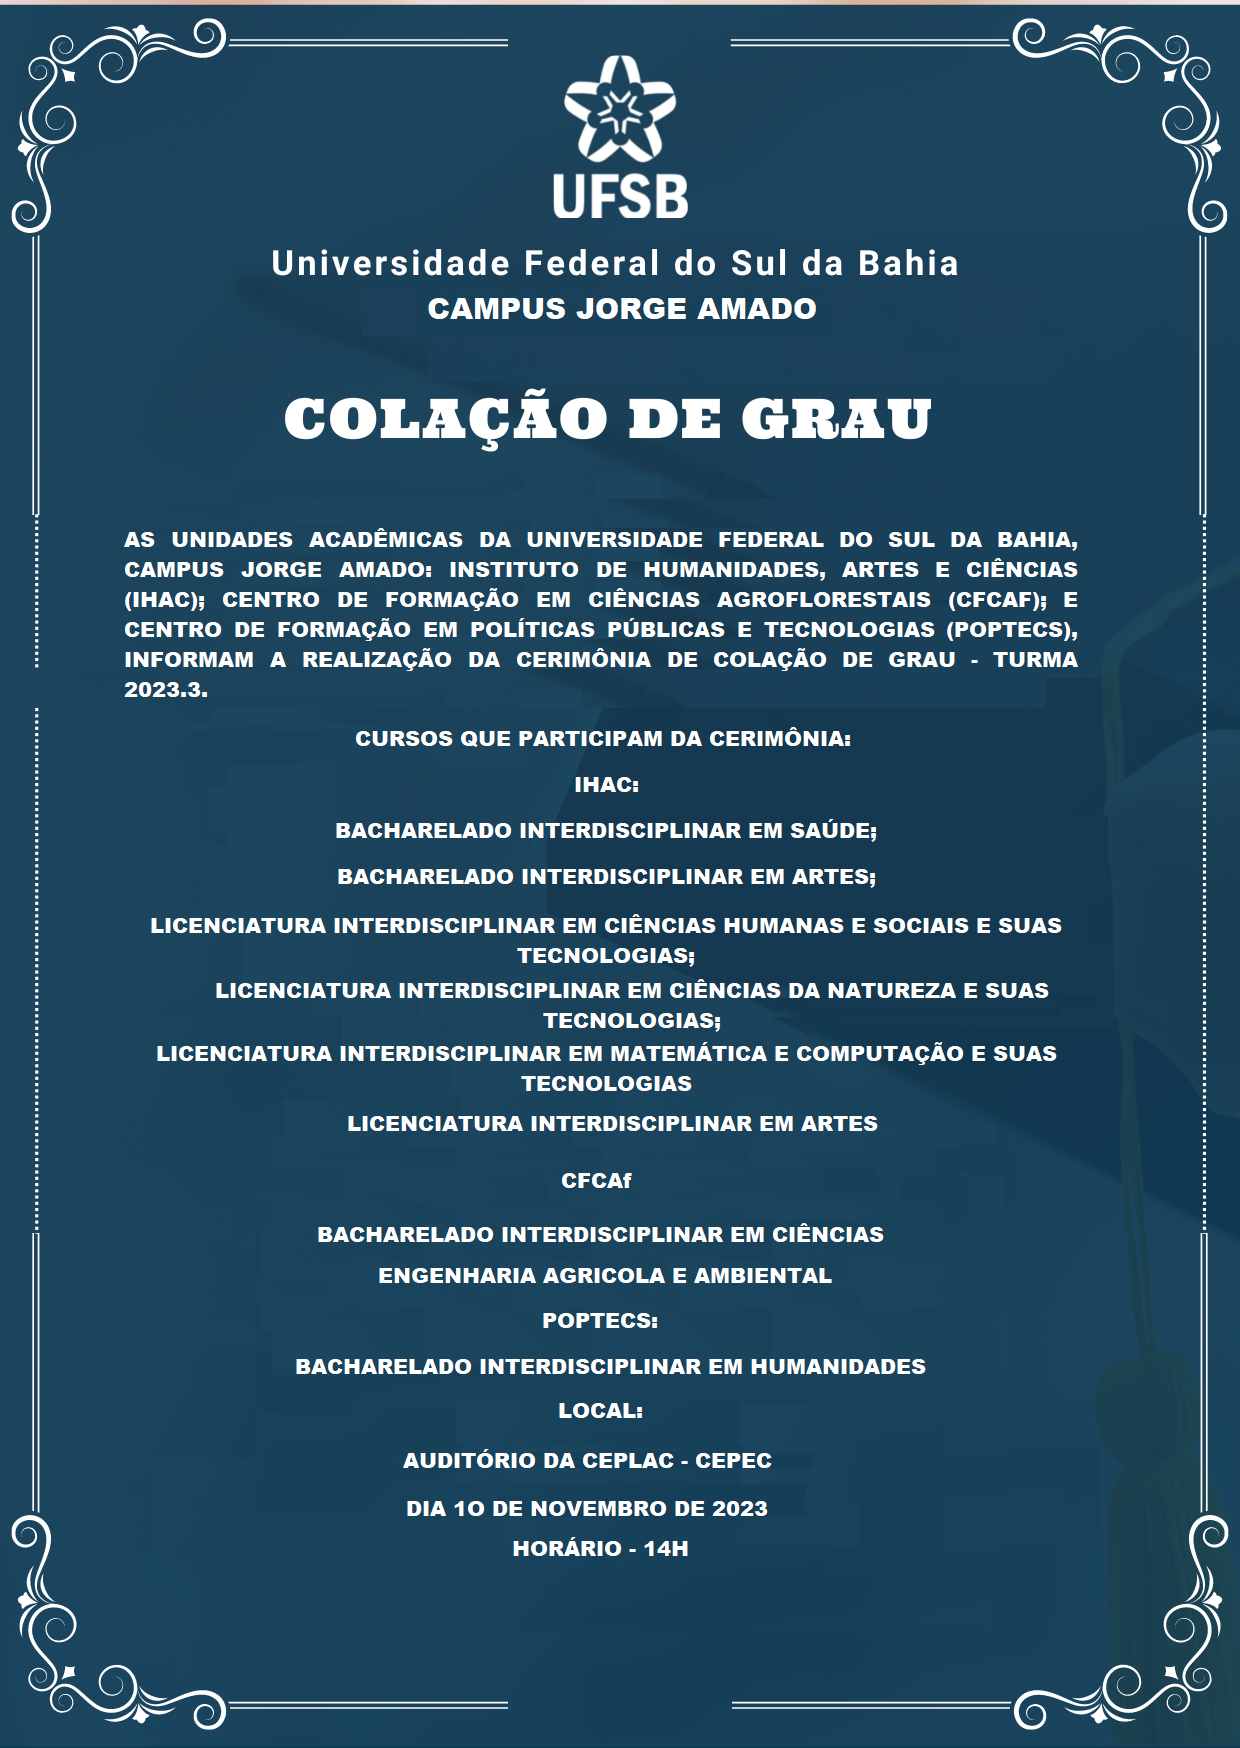 convite COLACAO DE GRAU CJA 2023.3 1 1